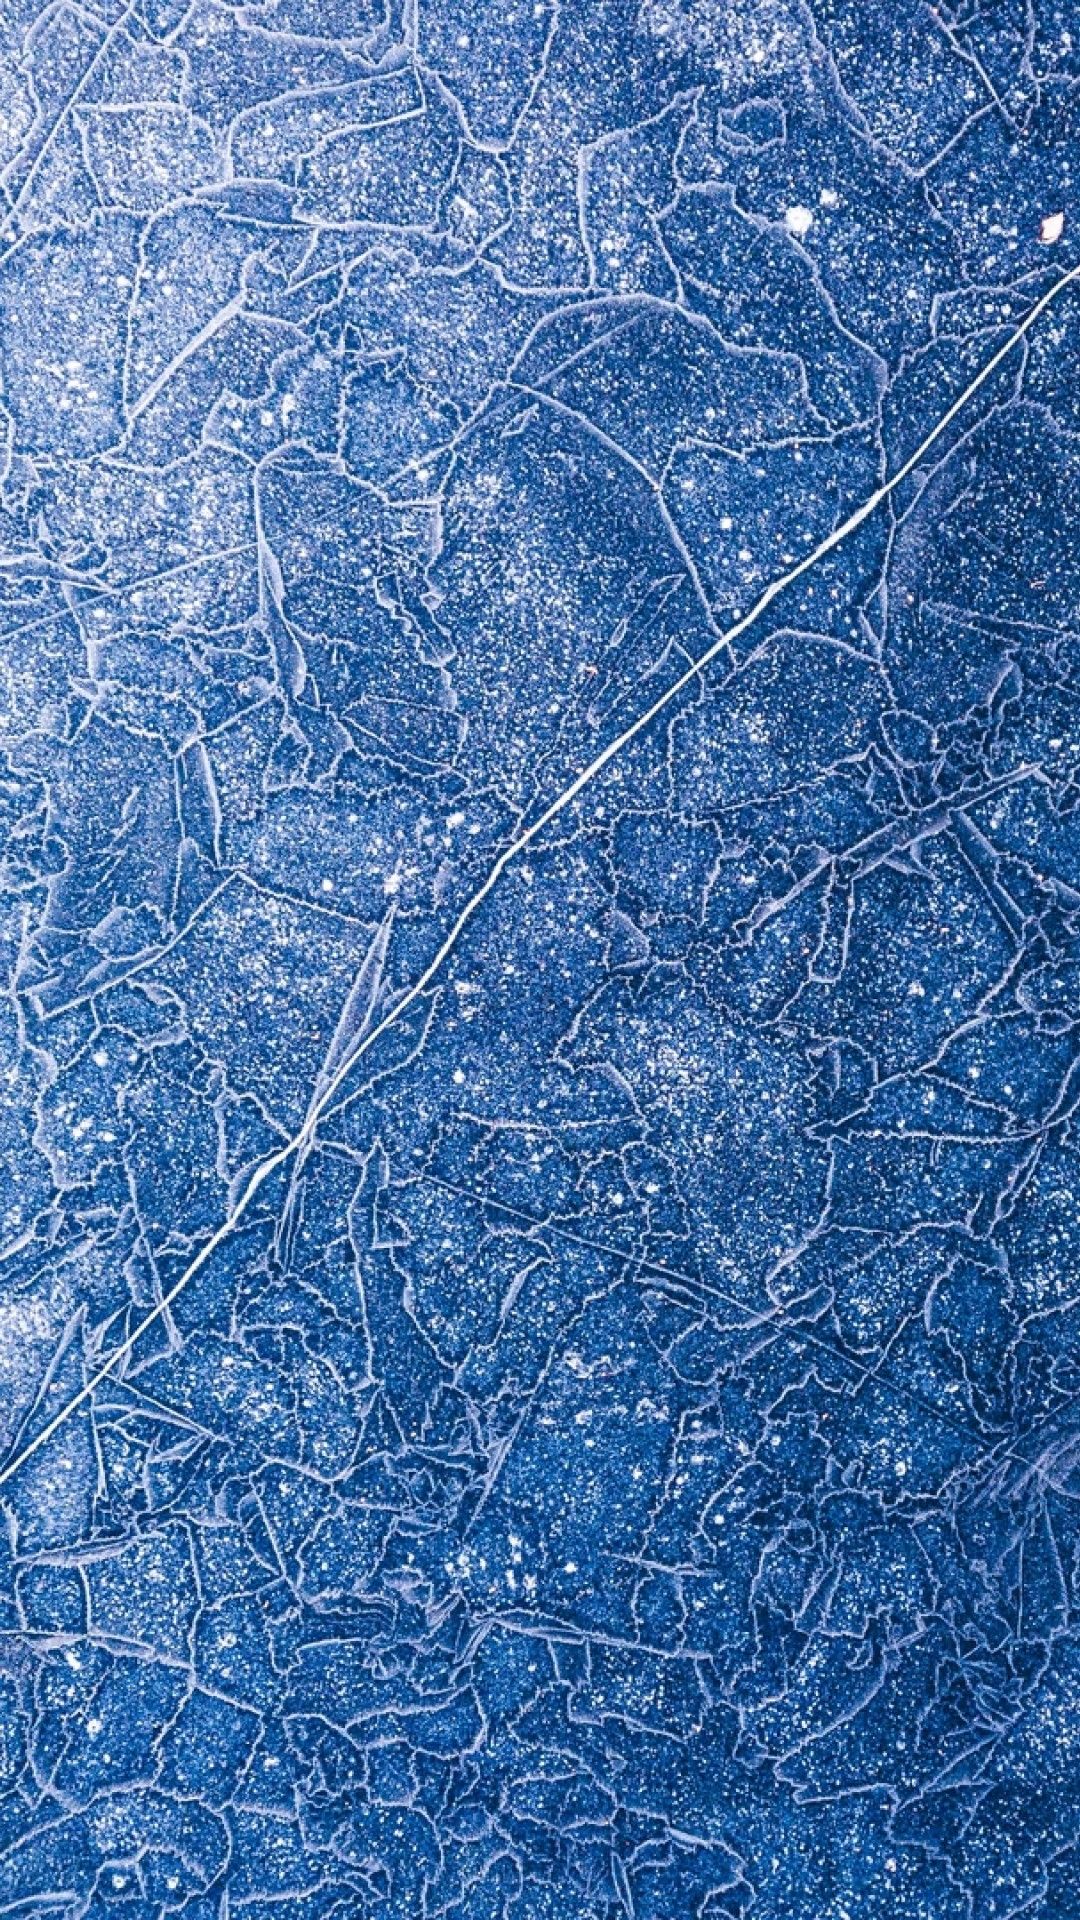 Frozen patterns HD Wallpaper iPhone 6 / 6S Plus Wallpaper